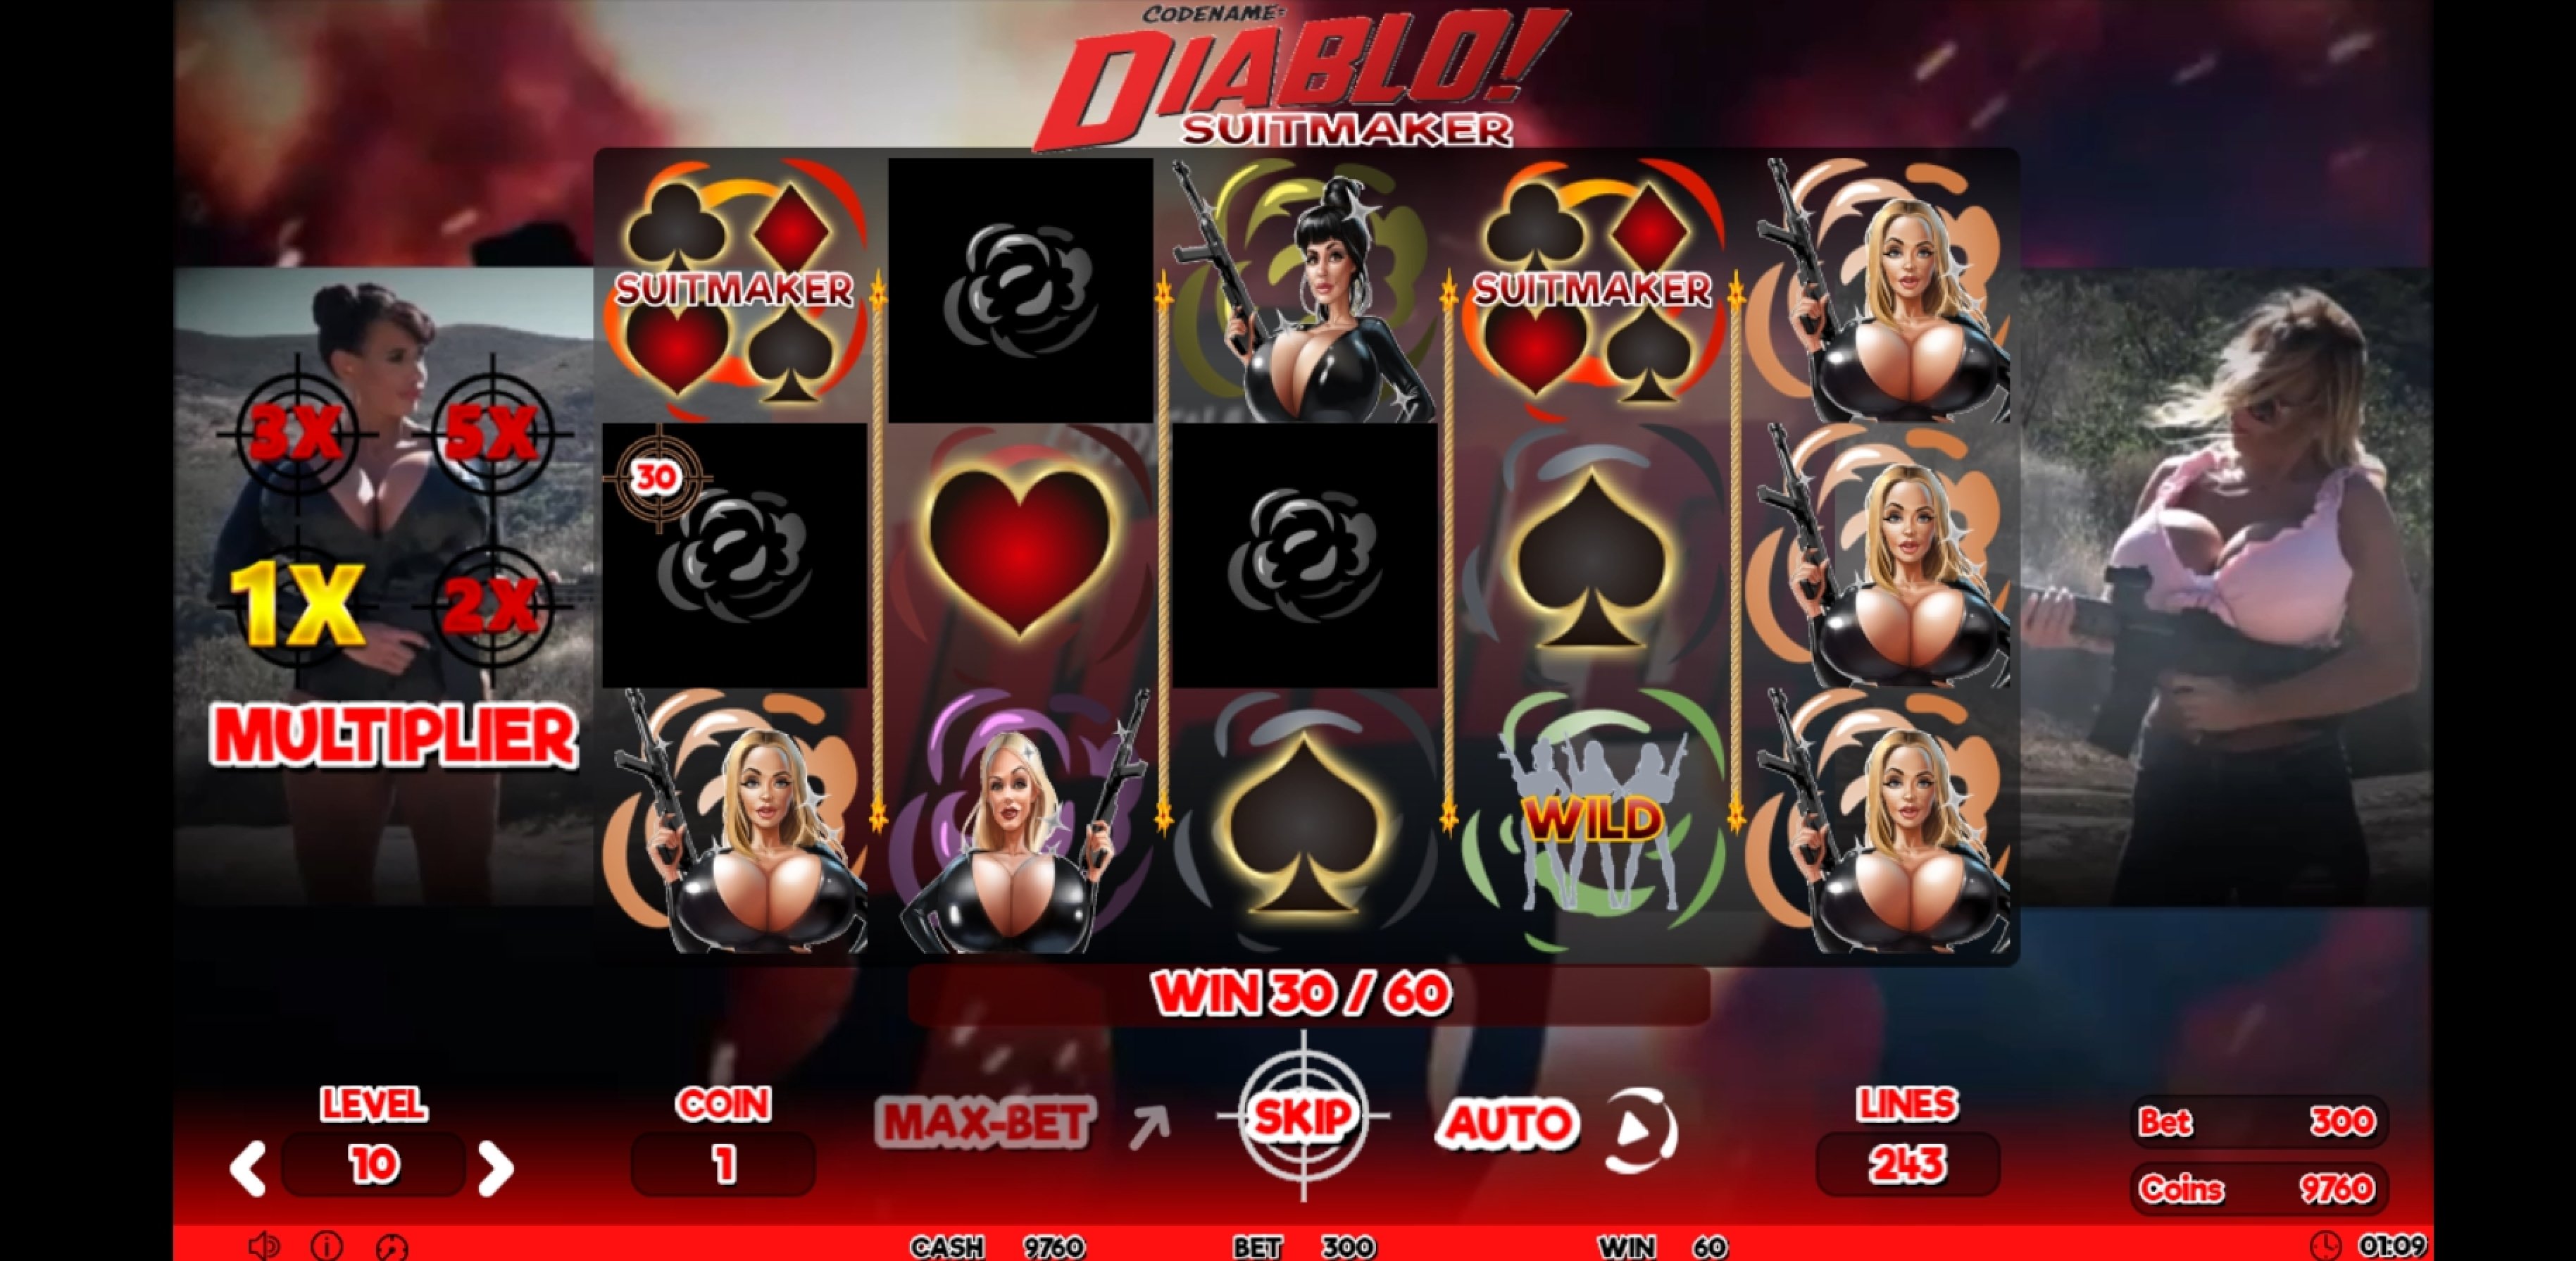 Win Money in Codename Diablo Suitmaker Free Slot Game by Skyrocket Entertainment